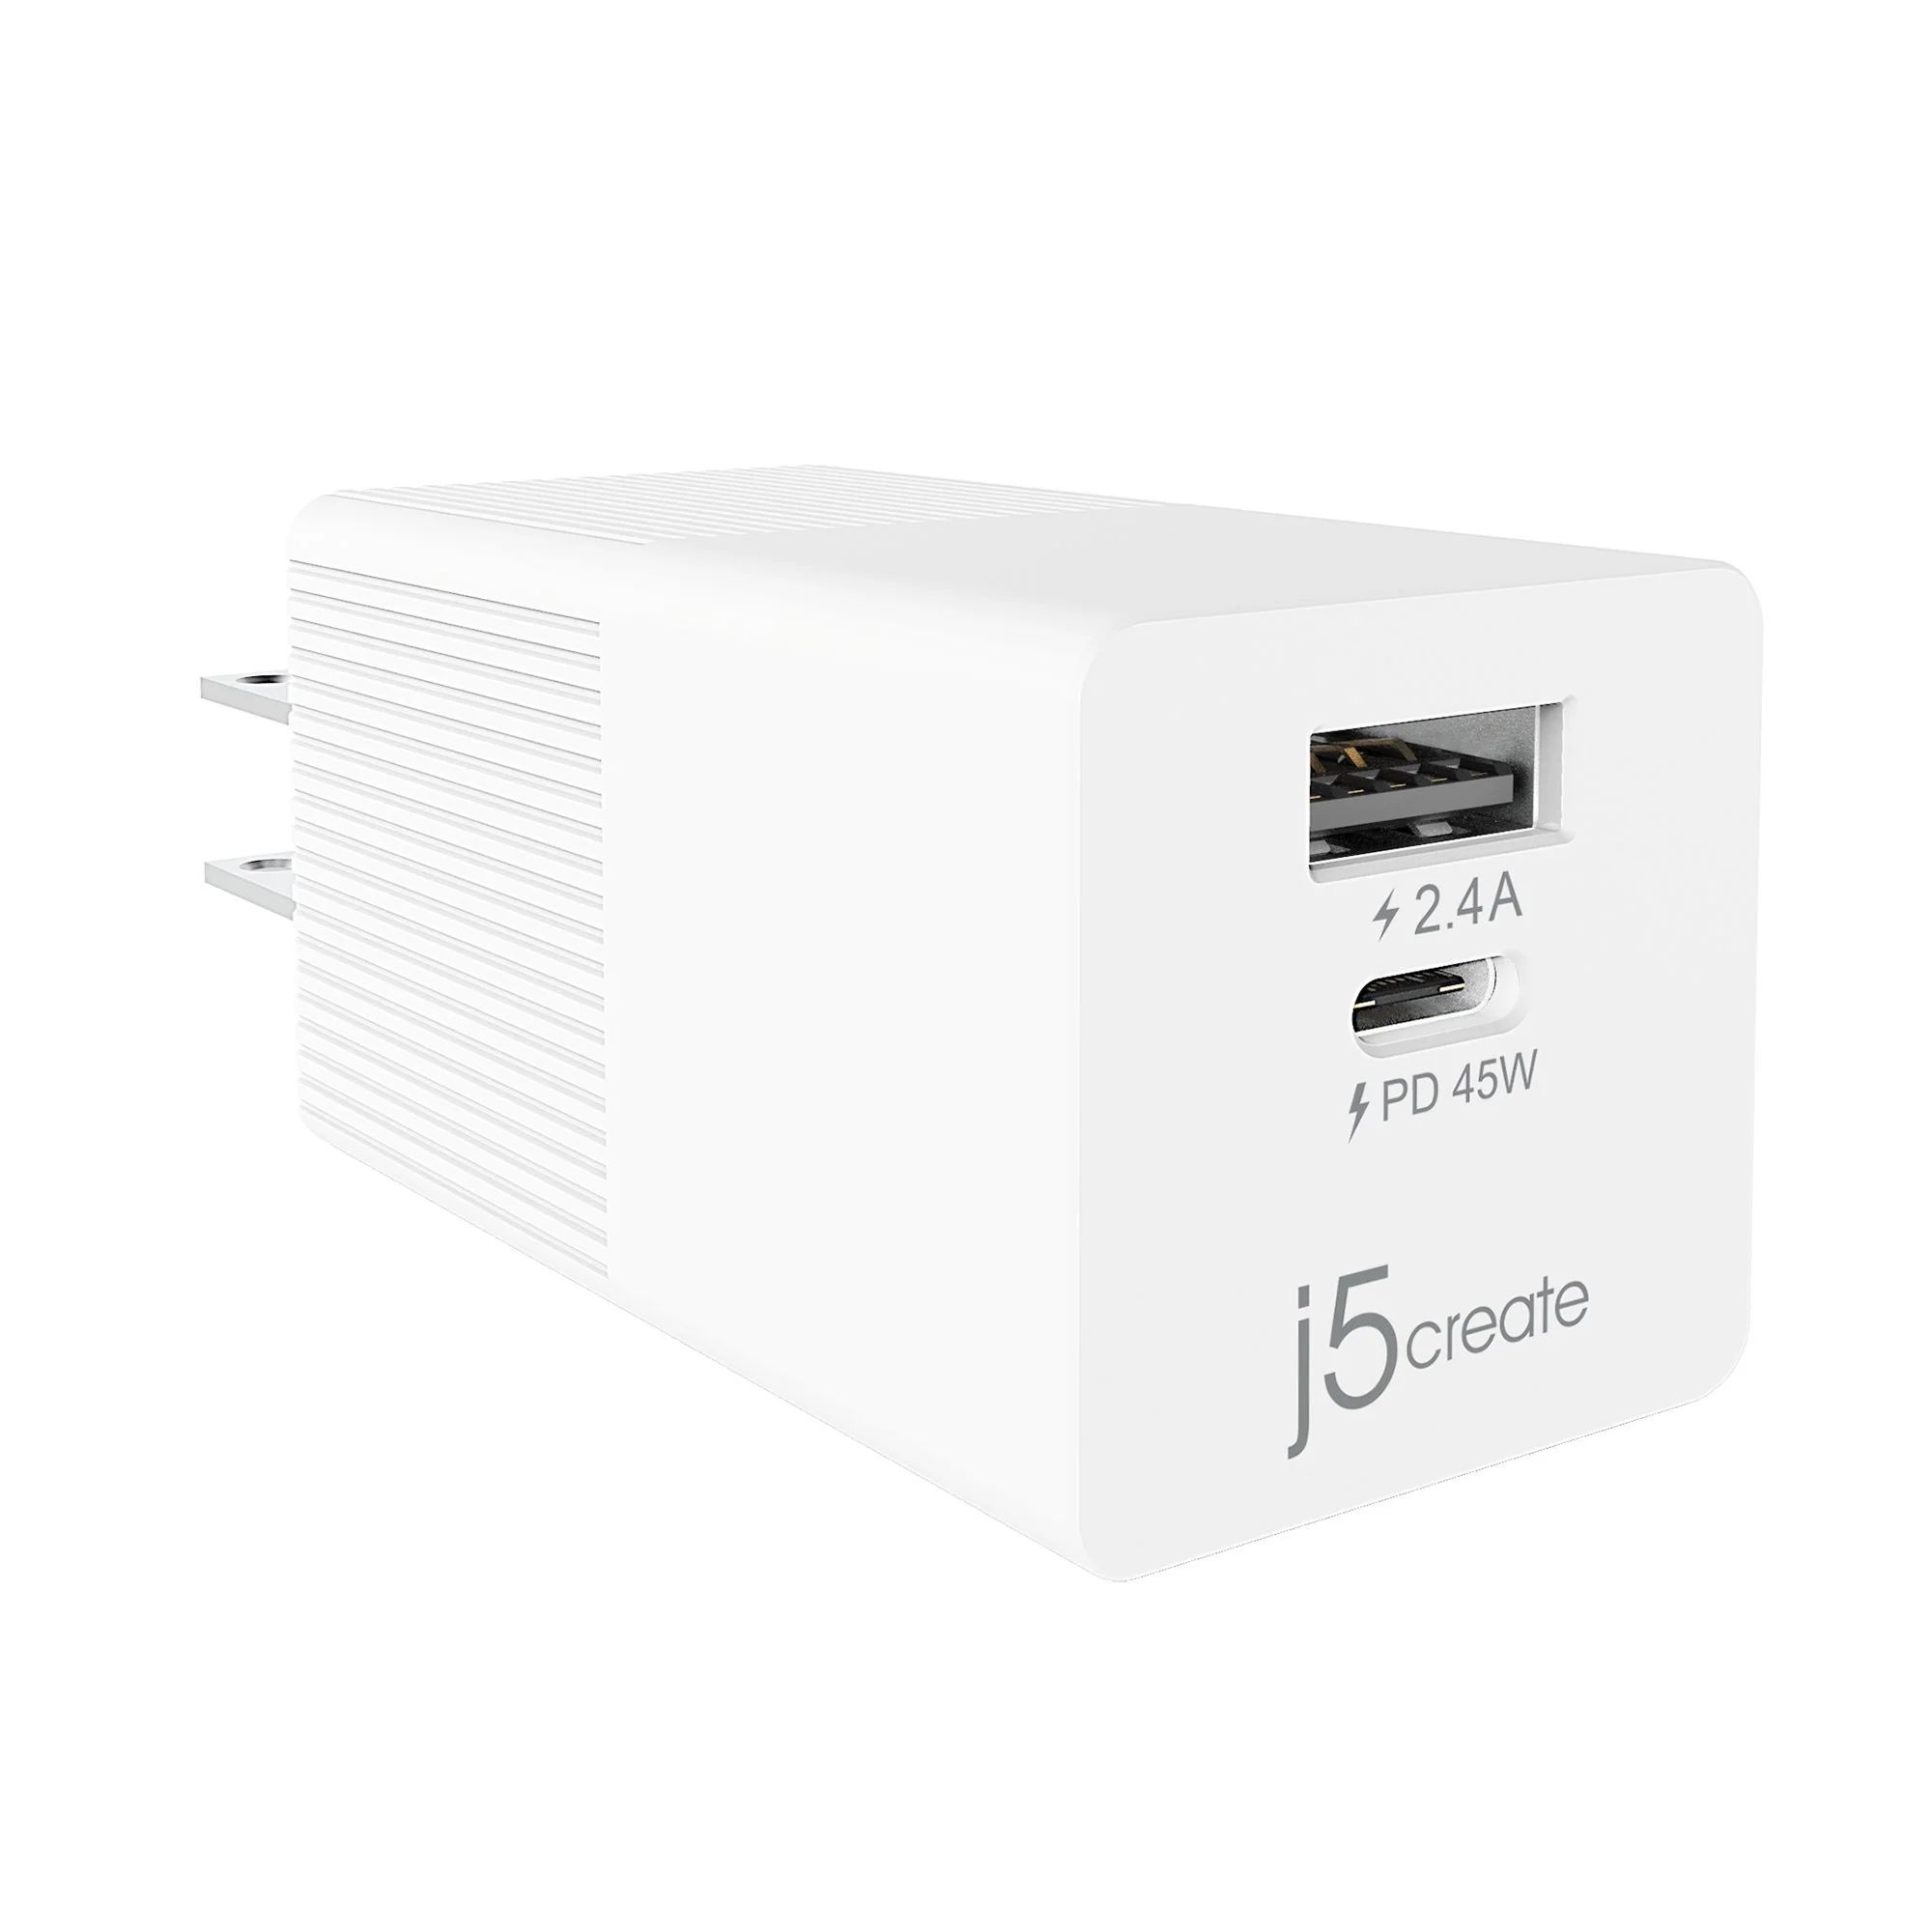 Сетевое зарядное устройство j5create 45W JUP2445